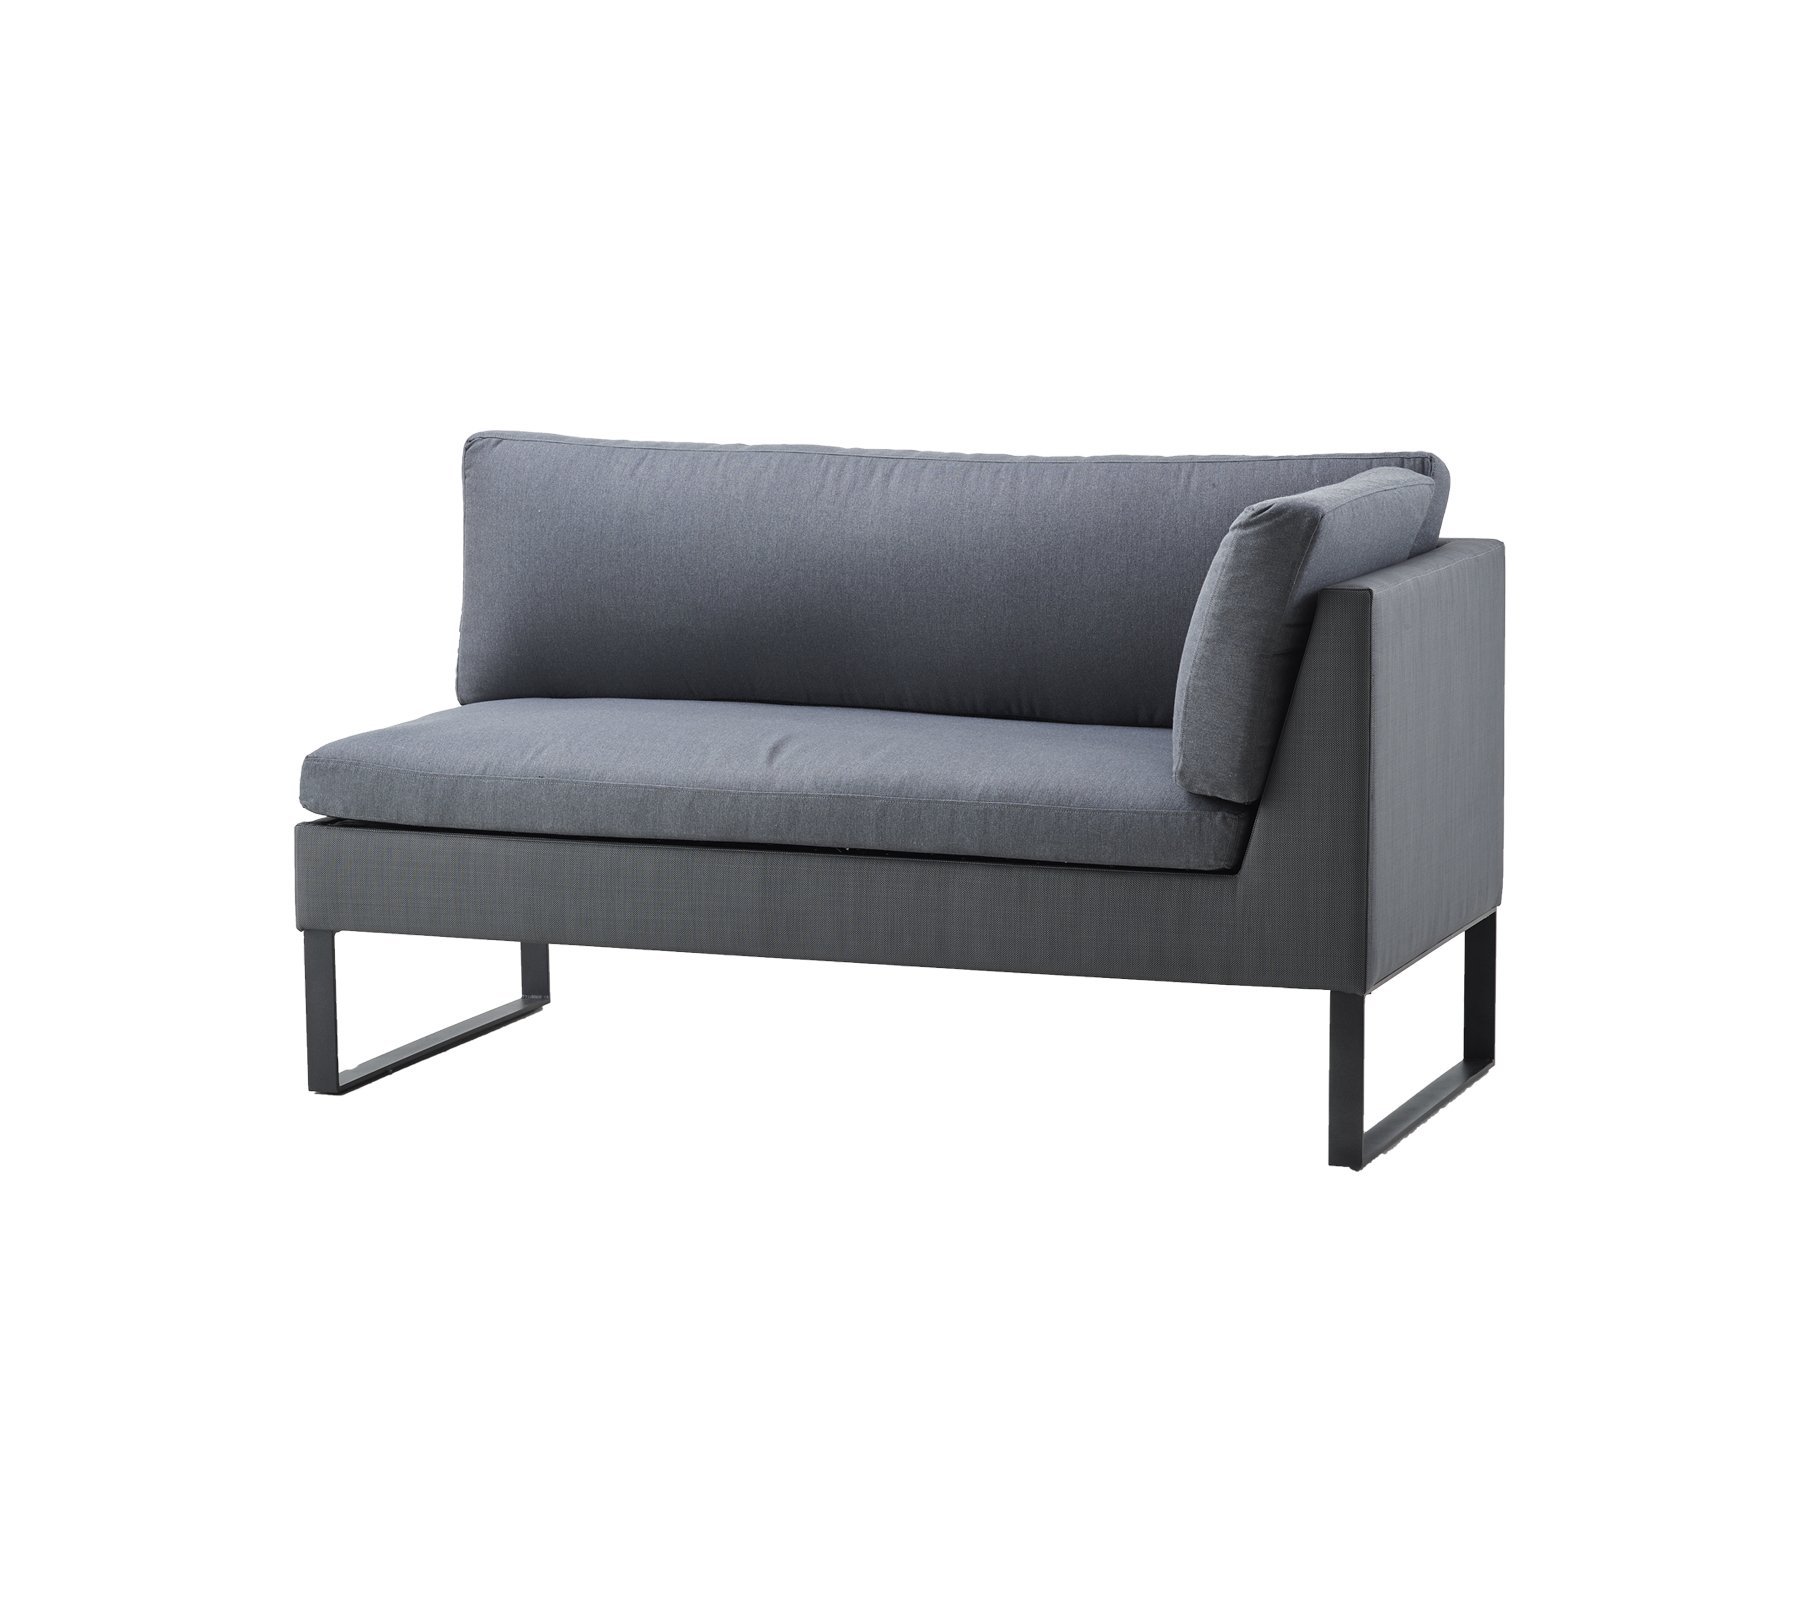 Flex 2 Seat Left Module Sofa modular from Cane-line, designed by Cane-line Design Team